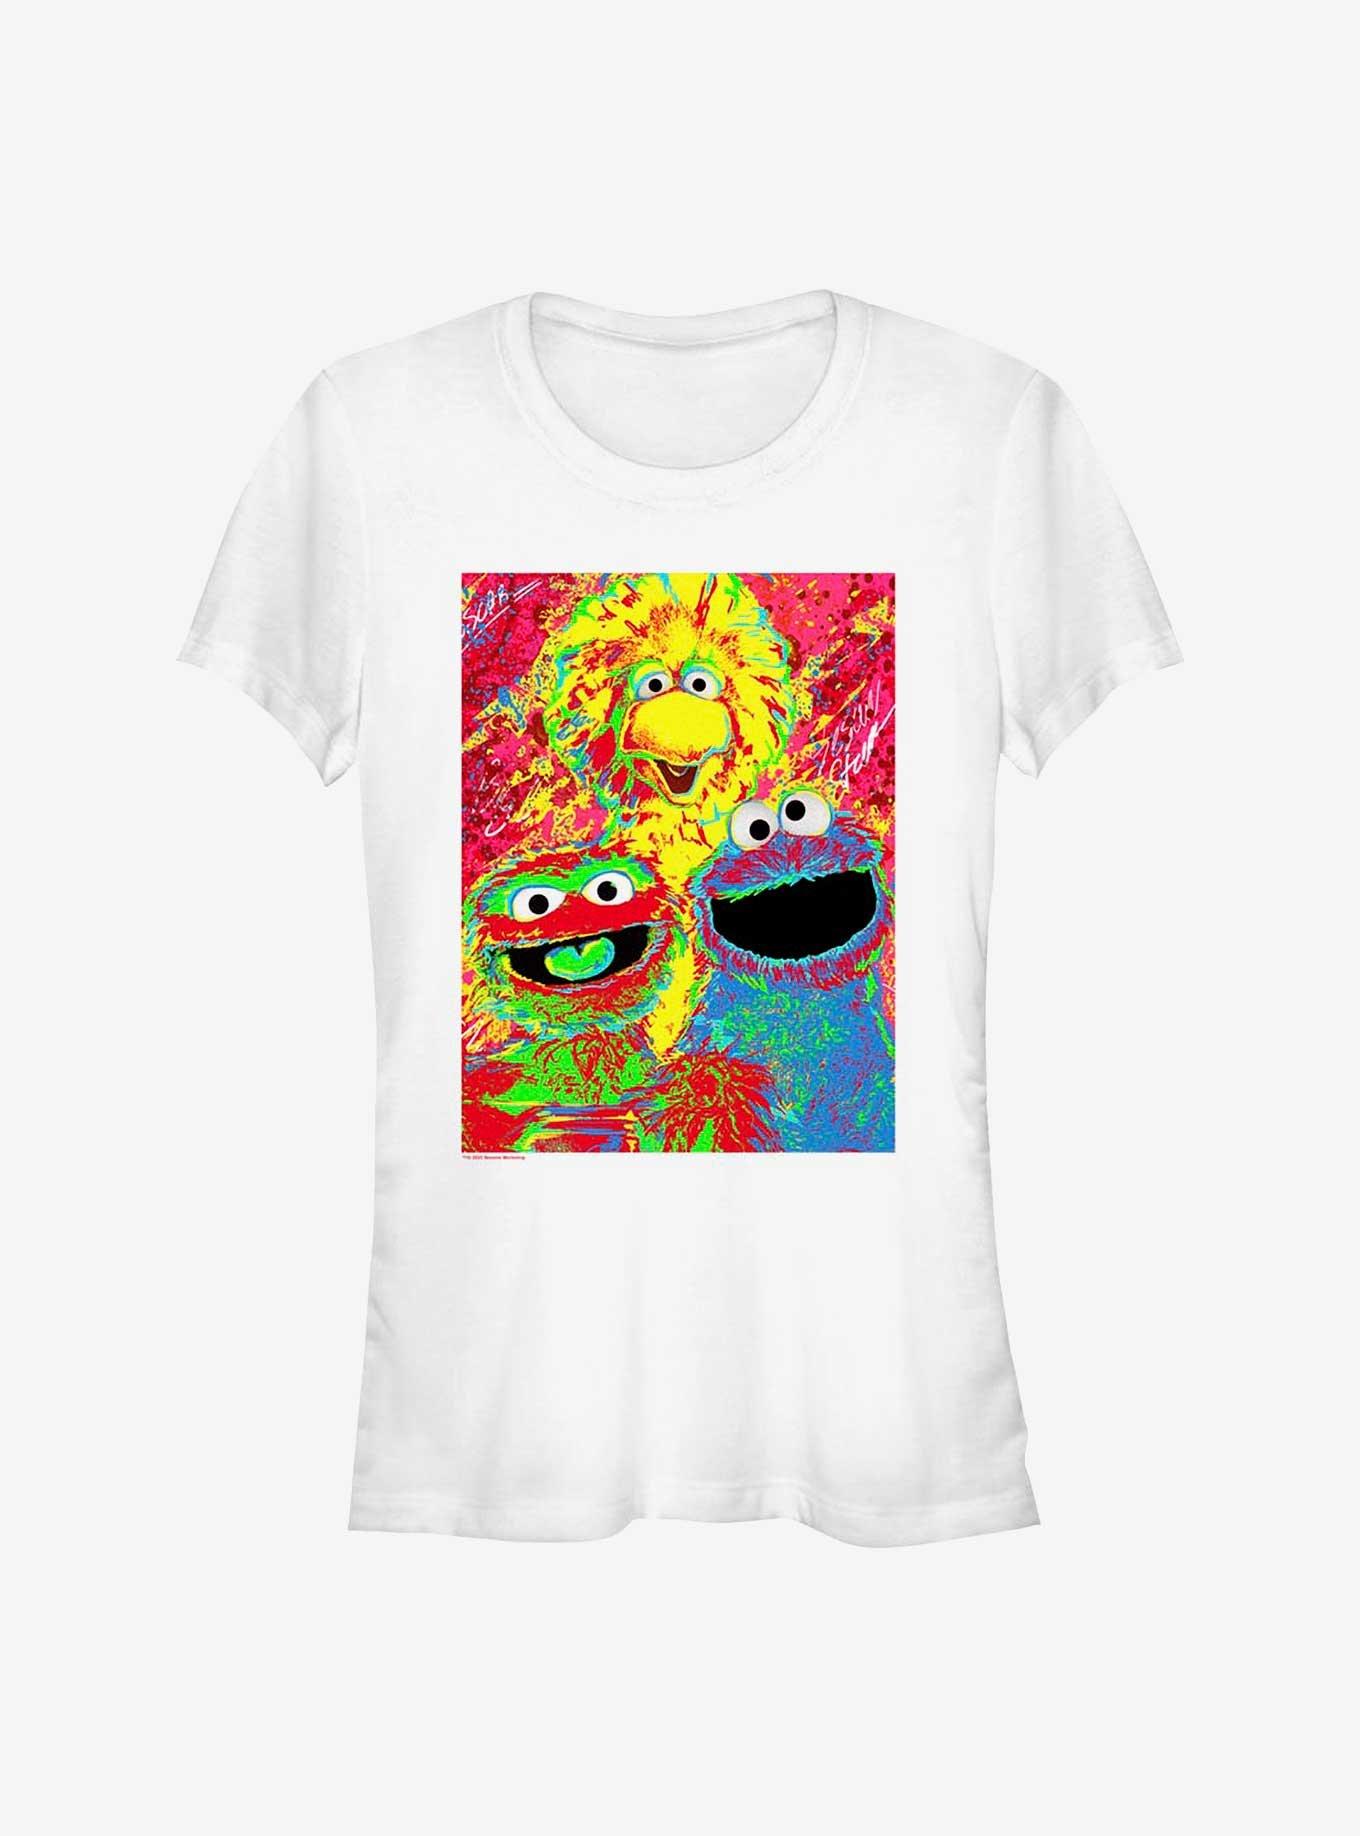 Sesame Street Big Bird, Oscar, and Cookie Monster Poster Girls T-Shirt, WHITE, hi-res